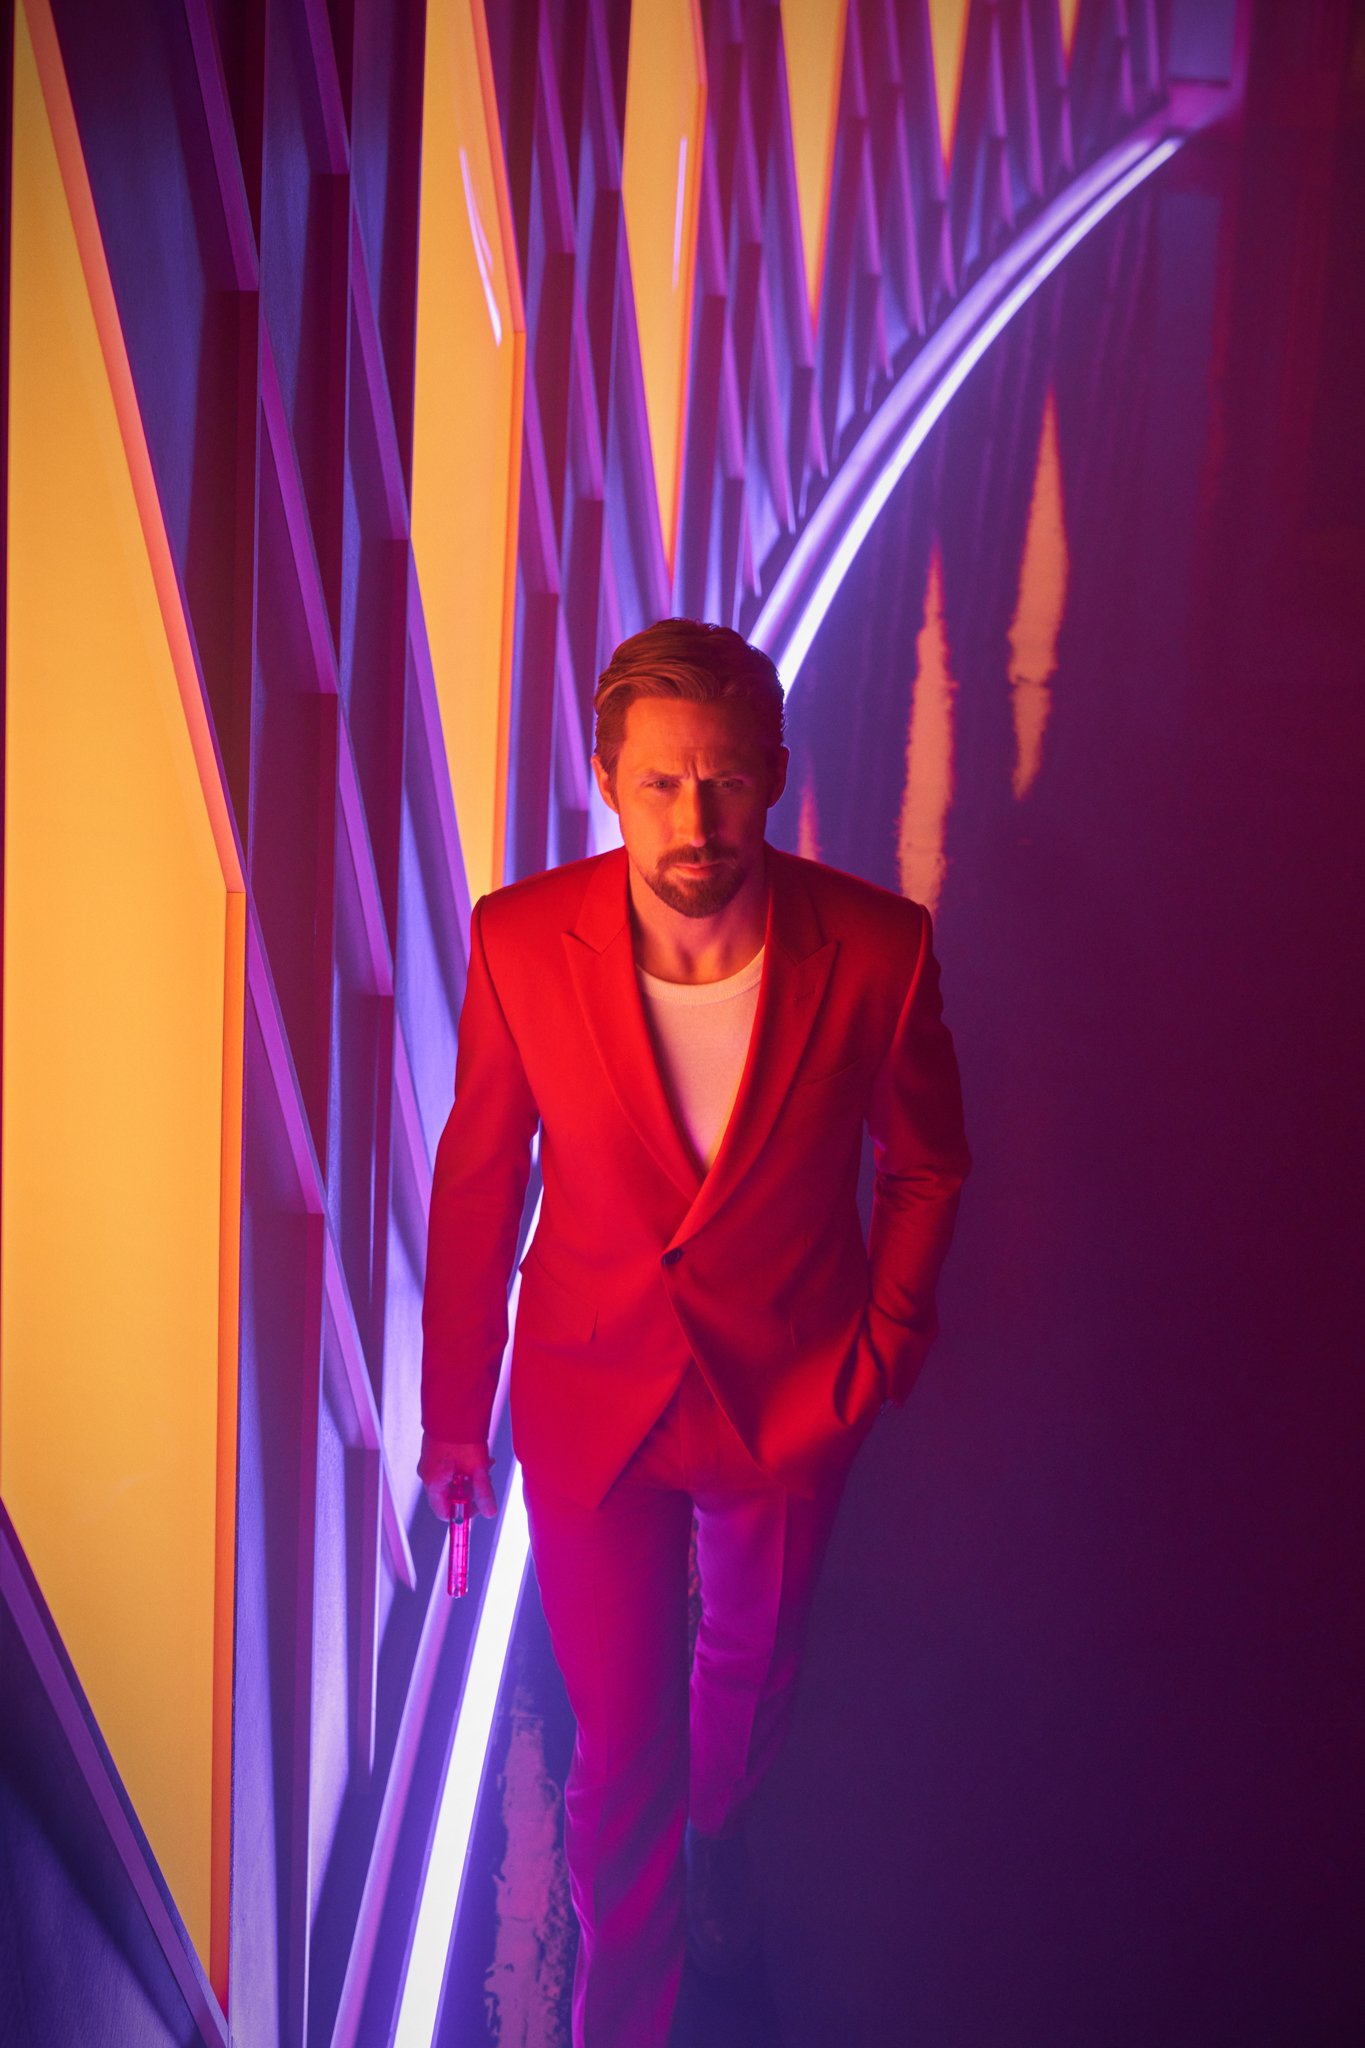  The Gray Man (2022) Ryan Gosling as Six. Cr. Paul Abell/Netflix © 2022 